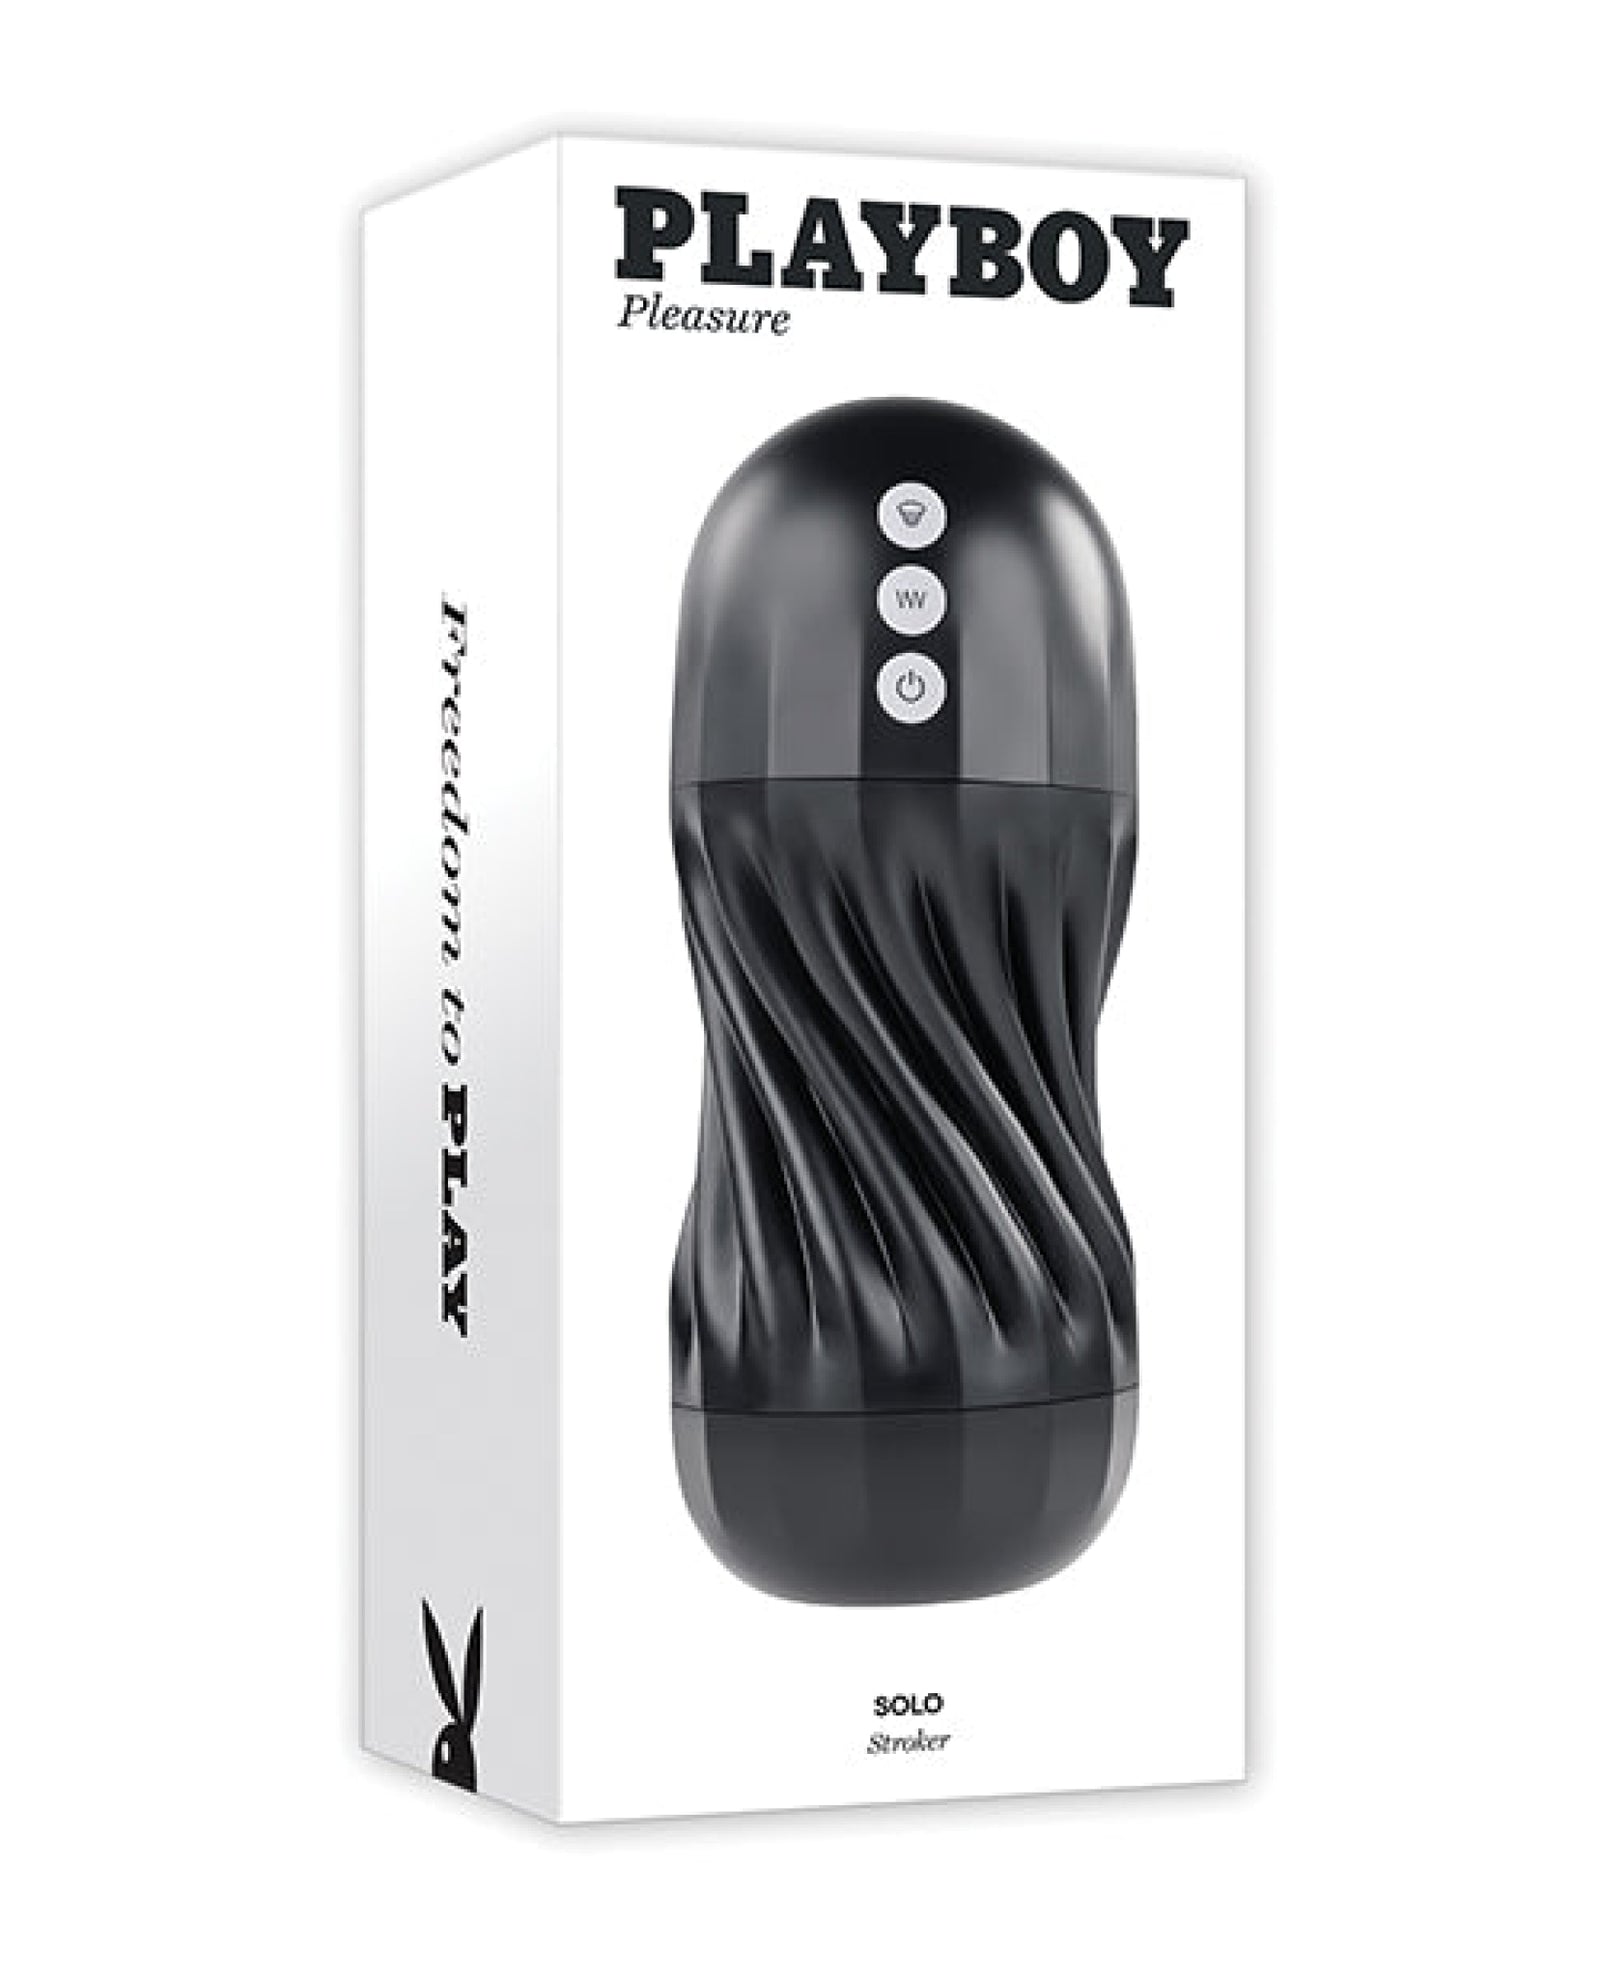 Playboy Pleasure Solo Stroker - 2 Am Playboy